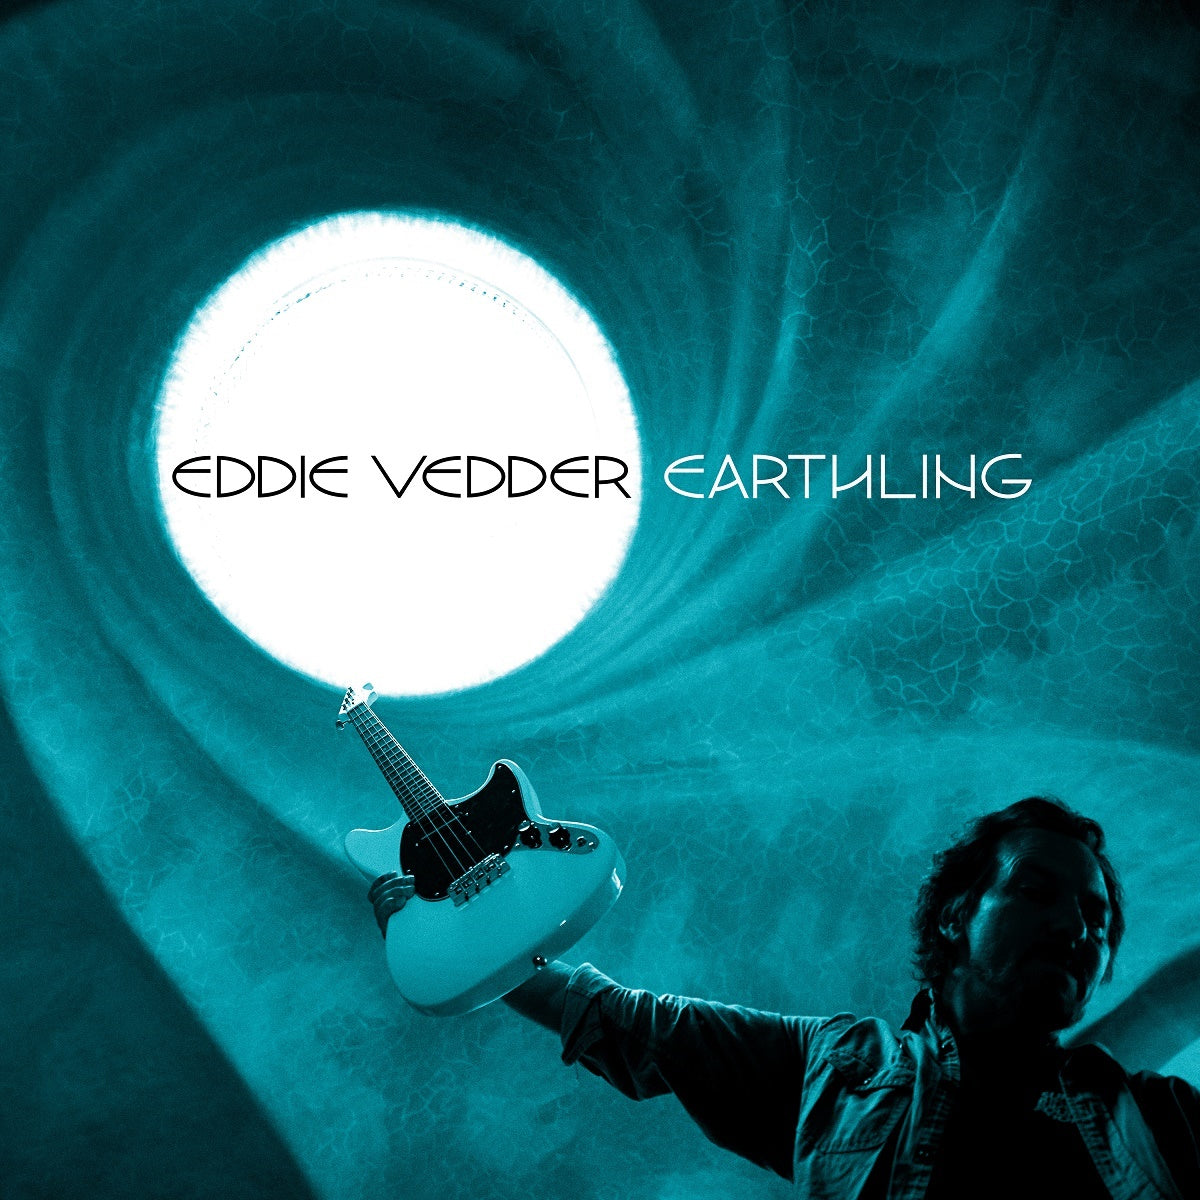 Eddie Vedder | Earthling [Explicit Content] Clear Vinyl, Blue, Black, Gatefold LP Jacket) | Vinyl